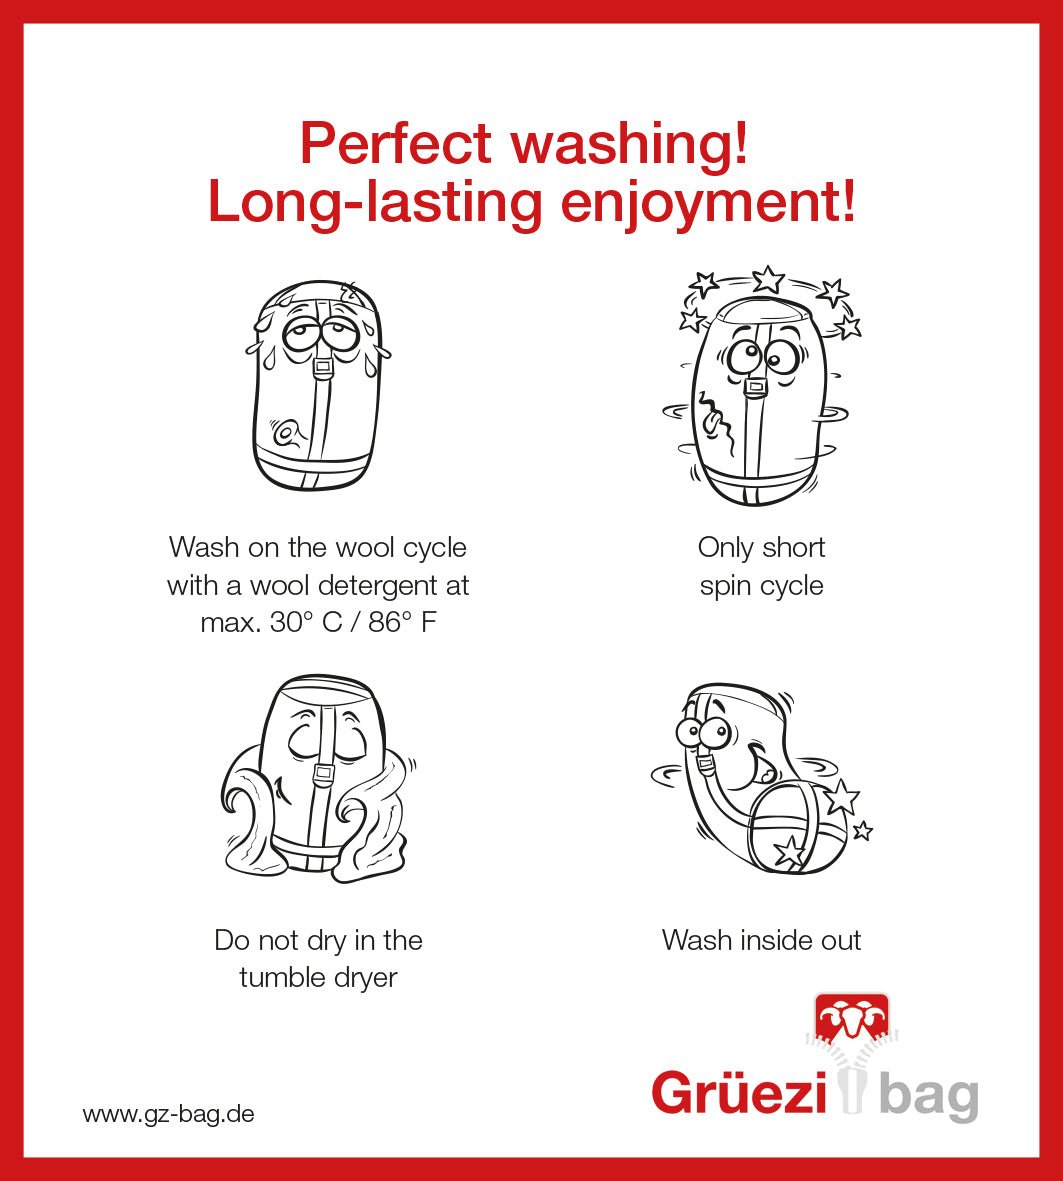 Grüezi bag Schlafsack Biopod Wolle Almhütte - Washing instructions english